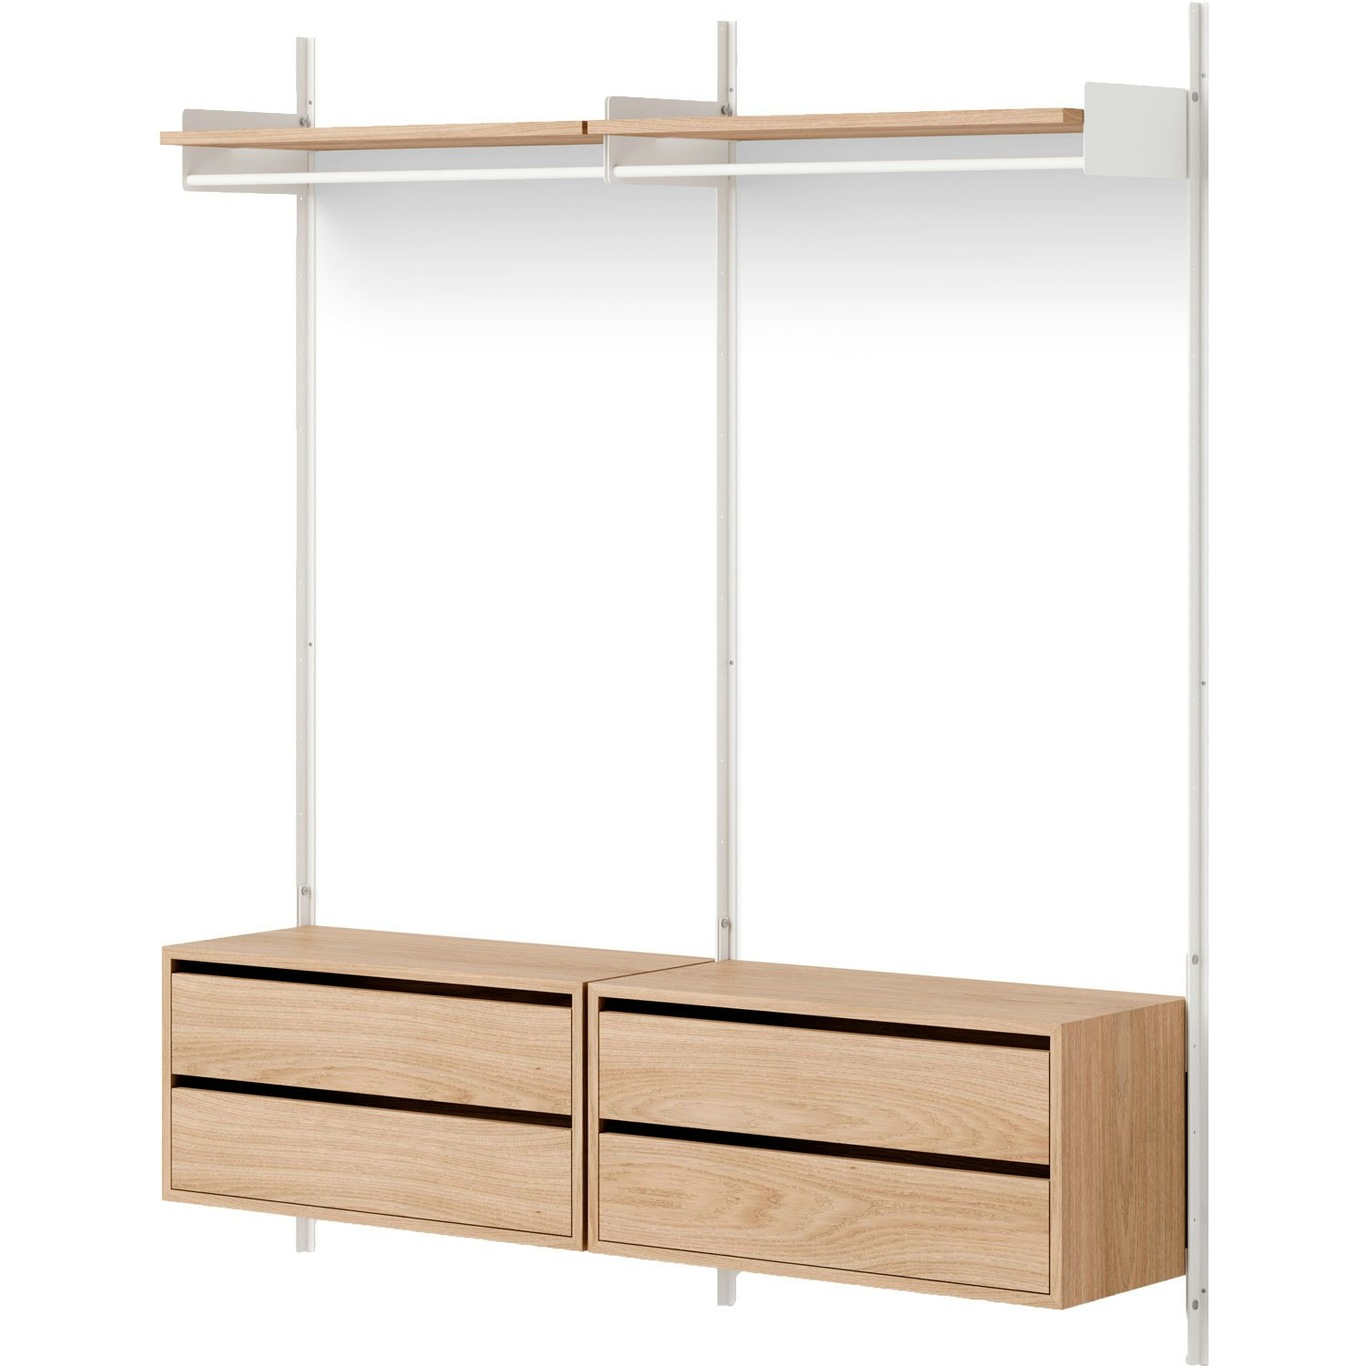 Wardrobe Wall Shelf 2 Cabinets With Drawers, Oak